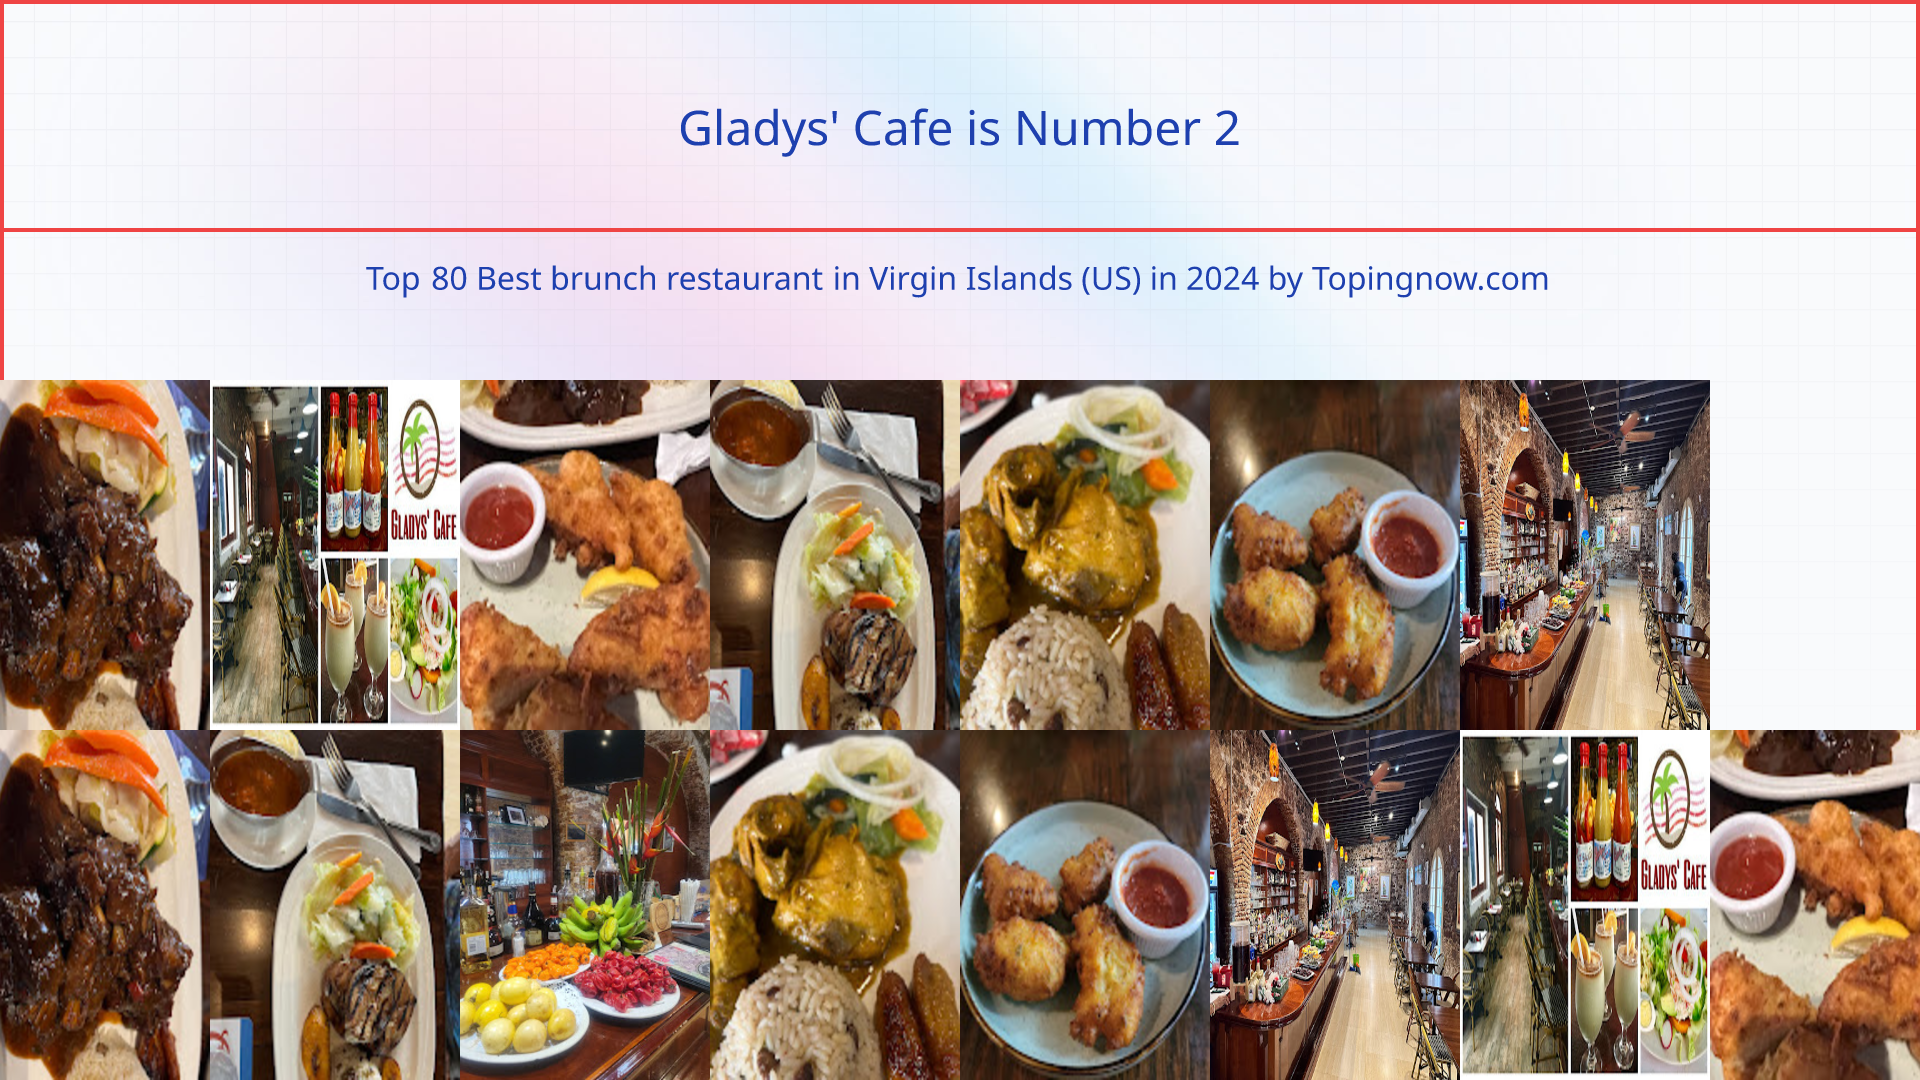 Gladys' Cafe: Top 80 Best brunch restaurant in Virgin Islands (US) in 2024